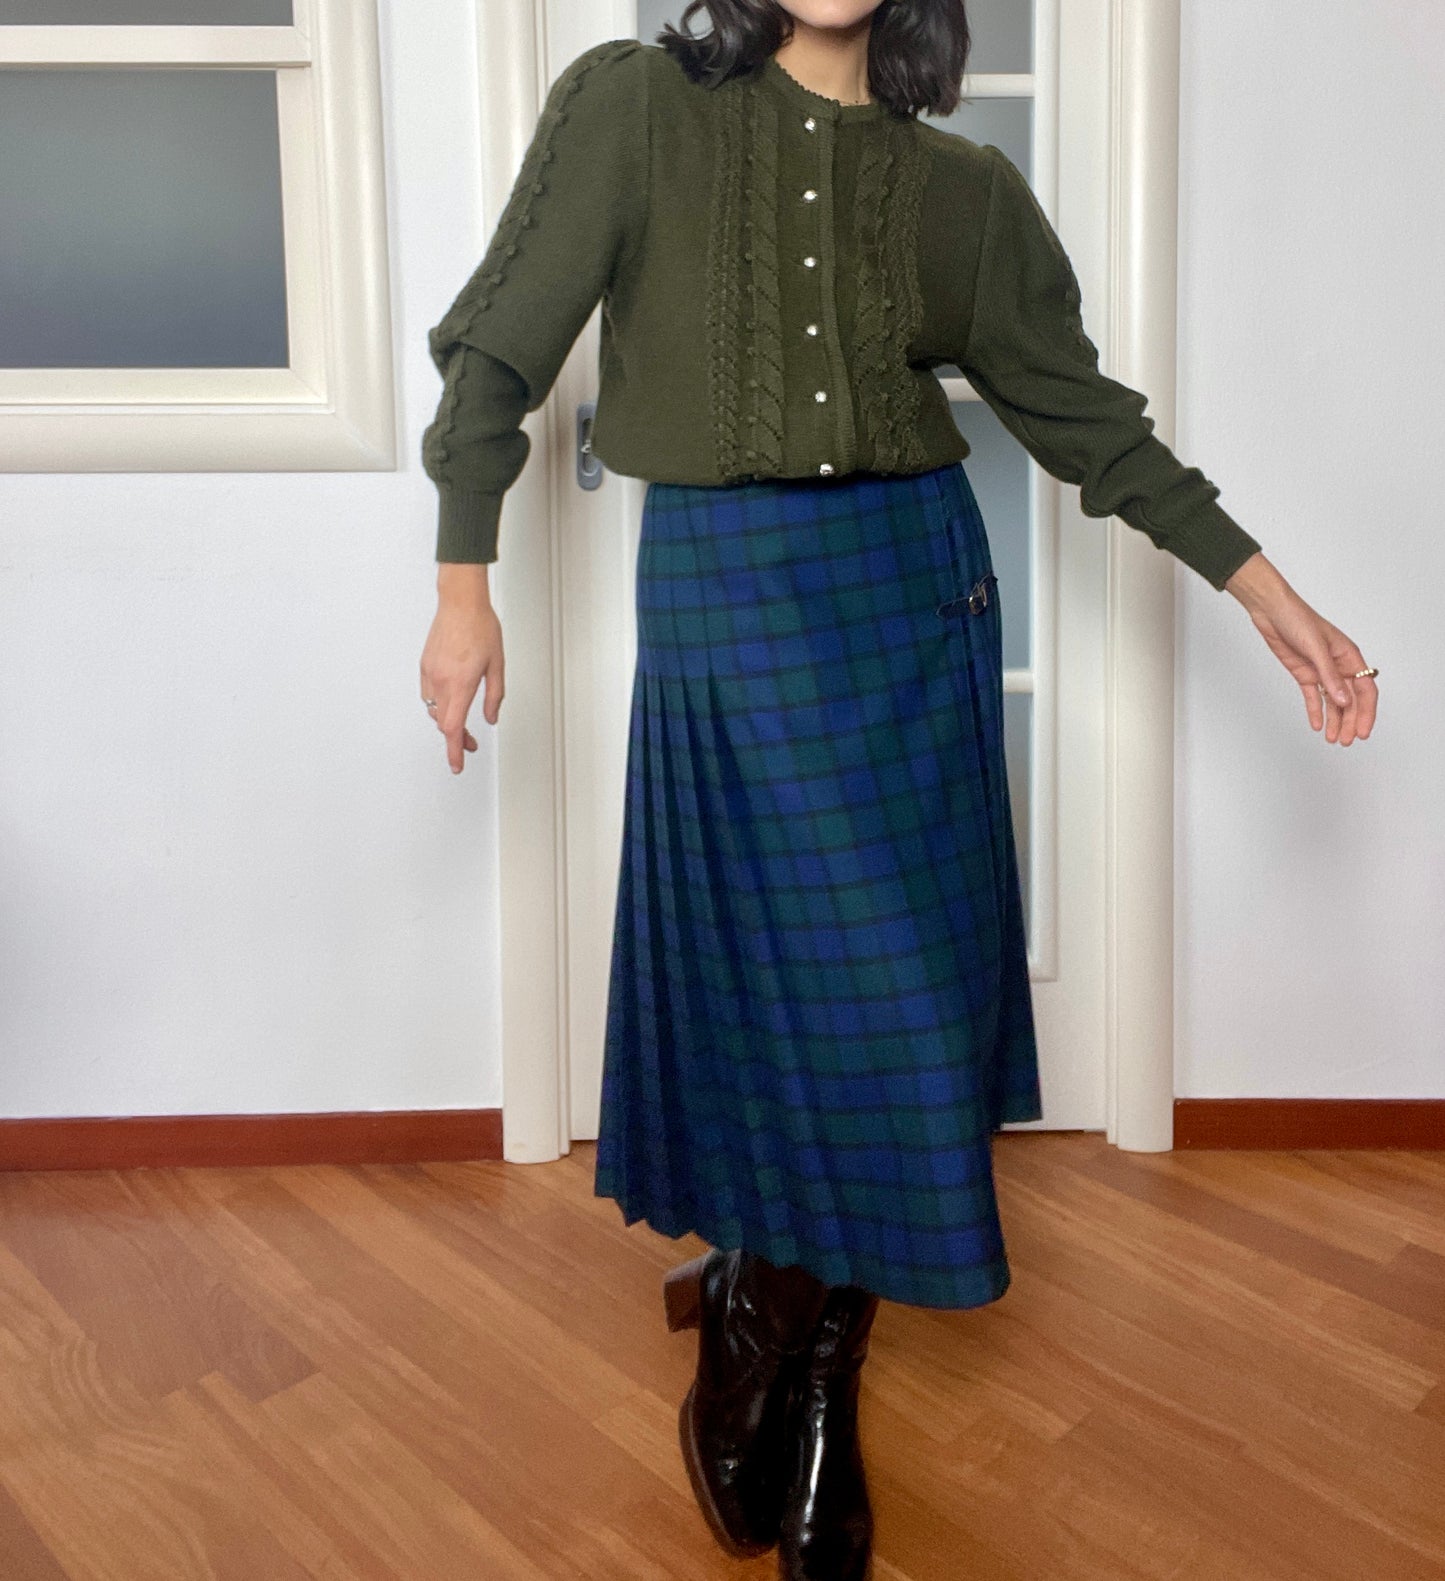 The pleated tartan skirt